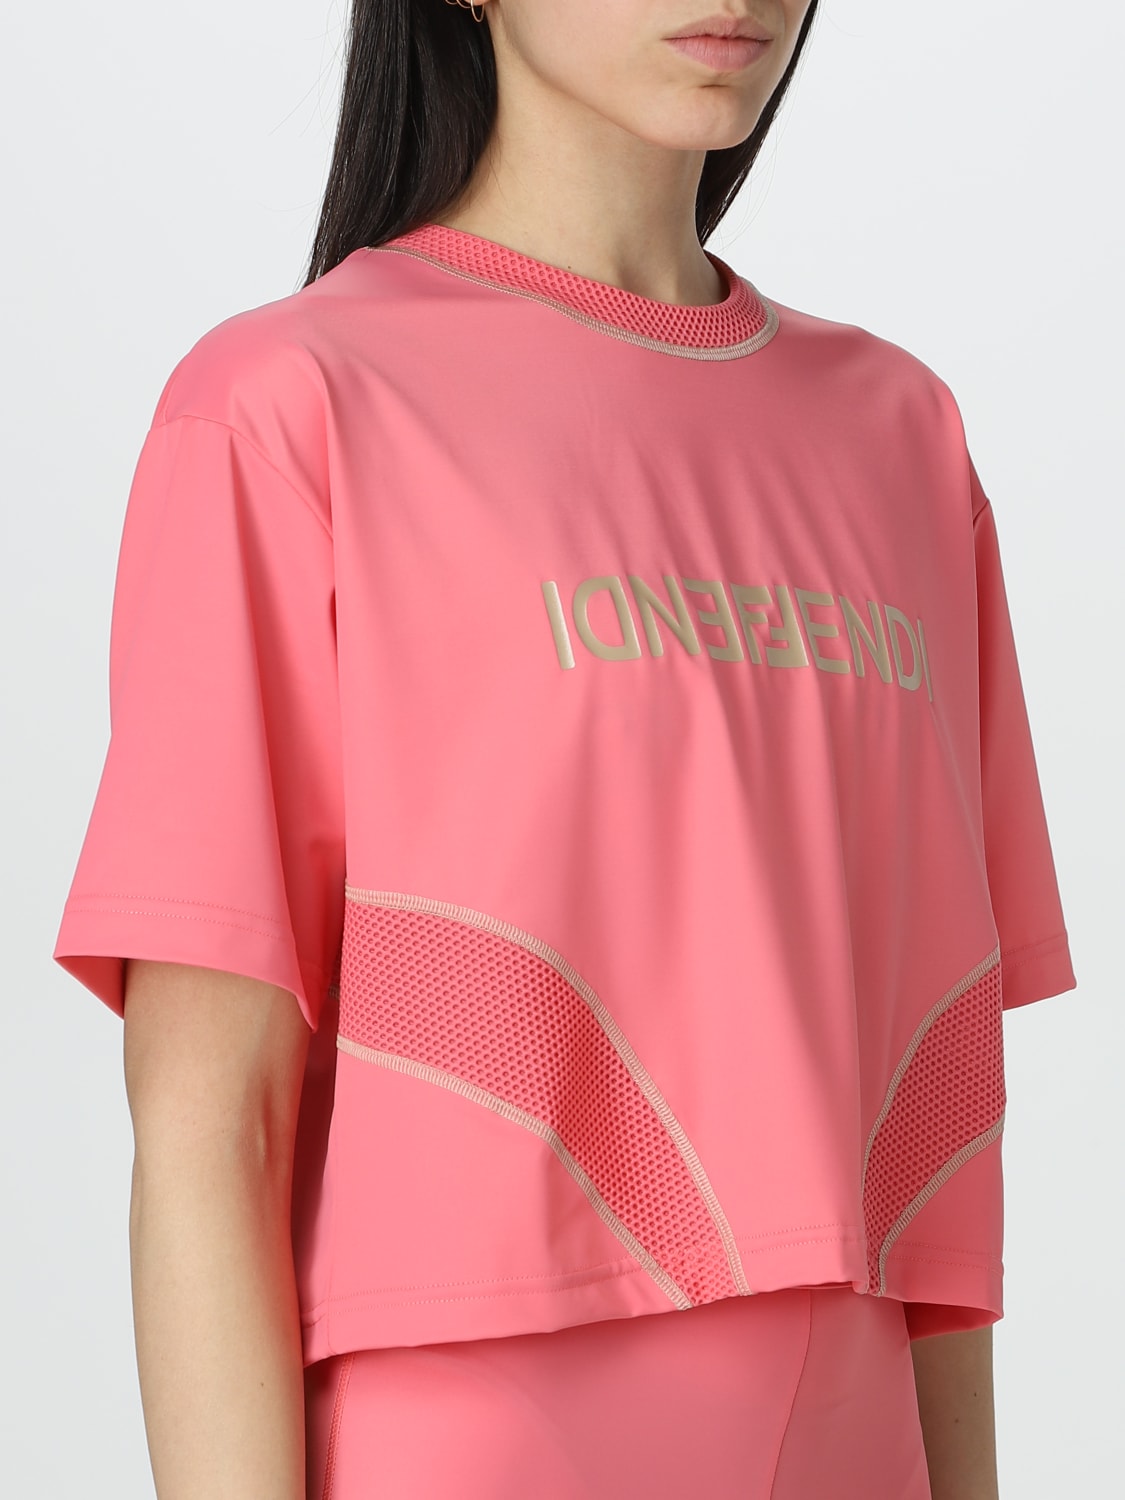 FENDI: Camiseta para mujer, Rosa | Camiseta Fendi FAF318AK9D en en GIGLIO.COM